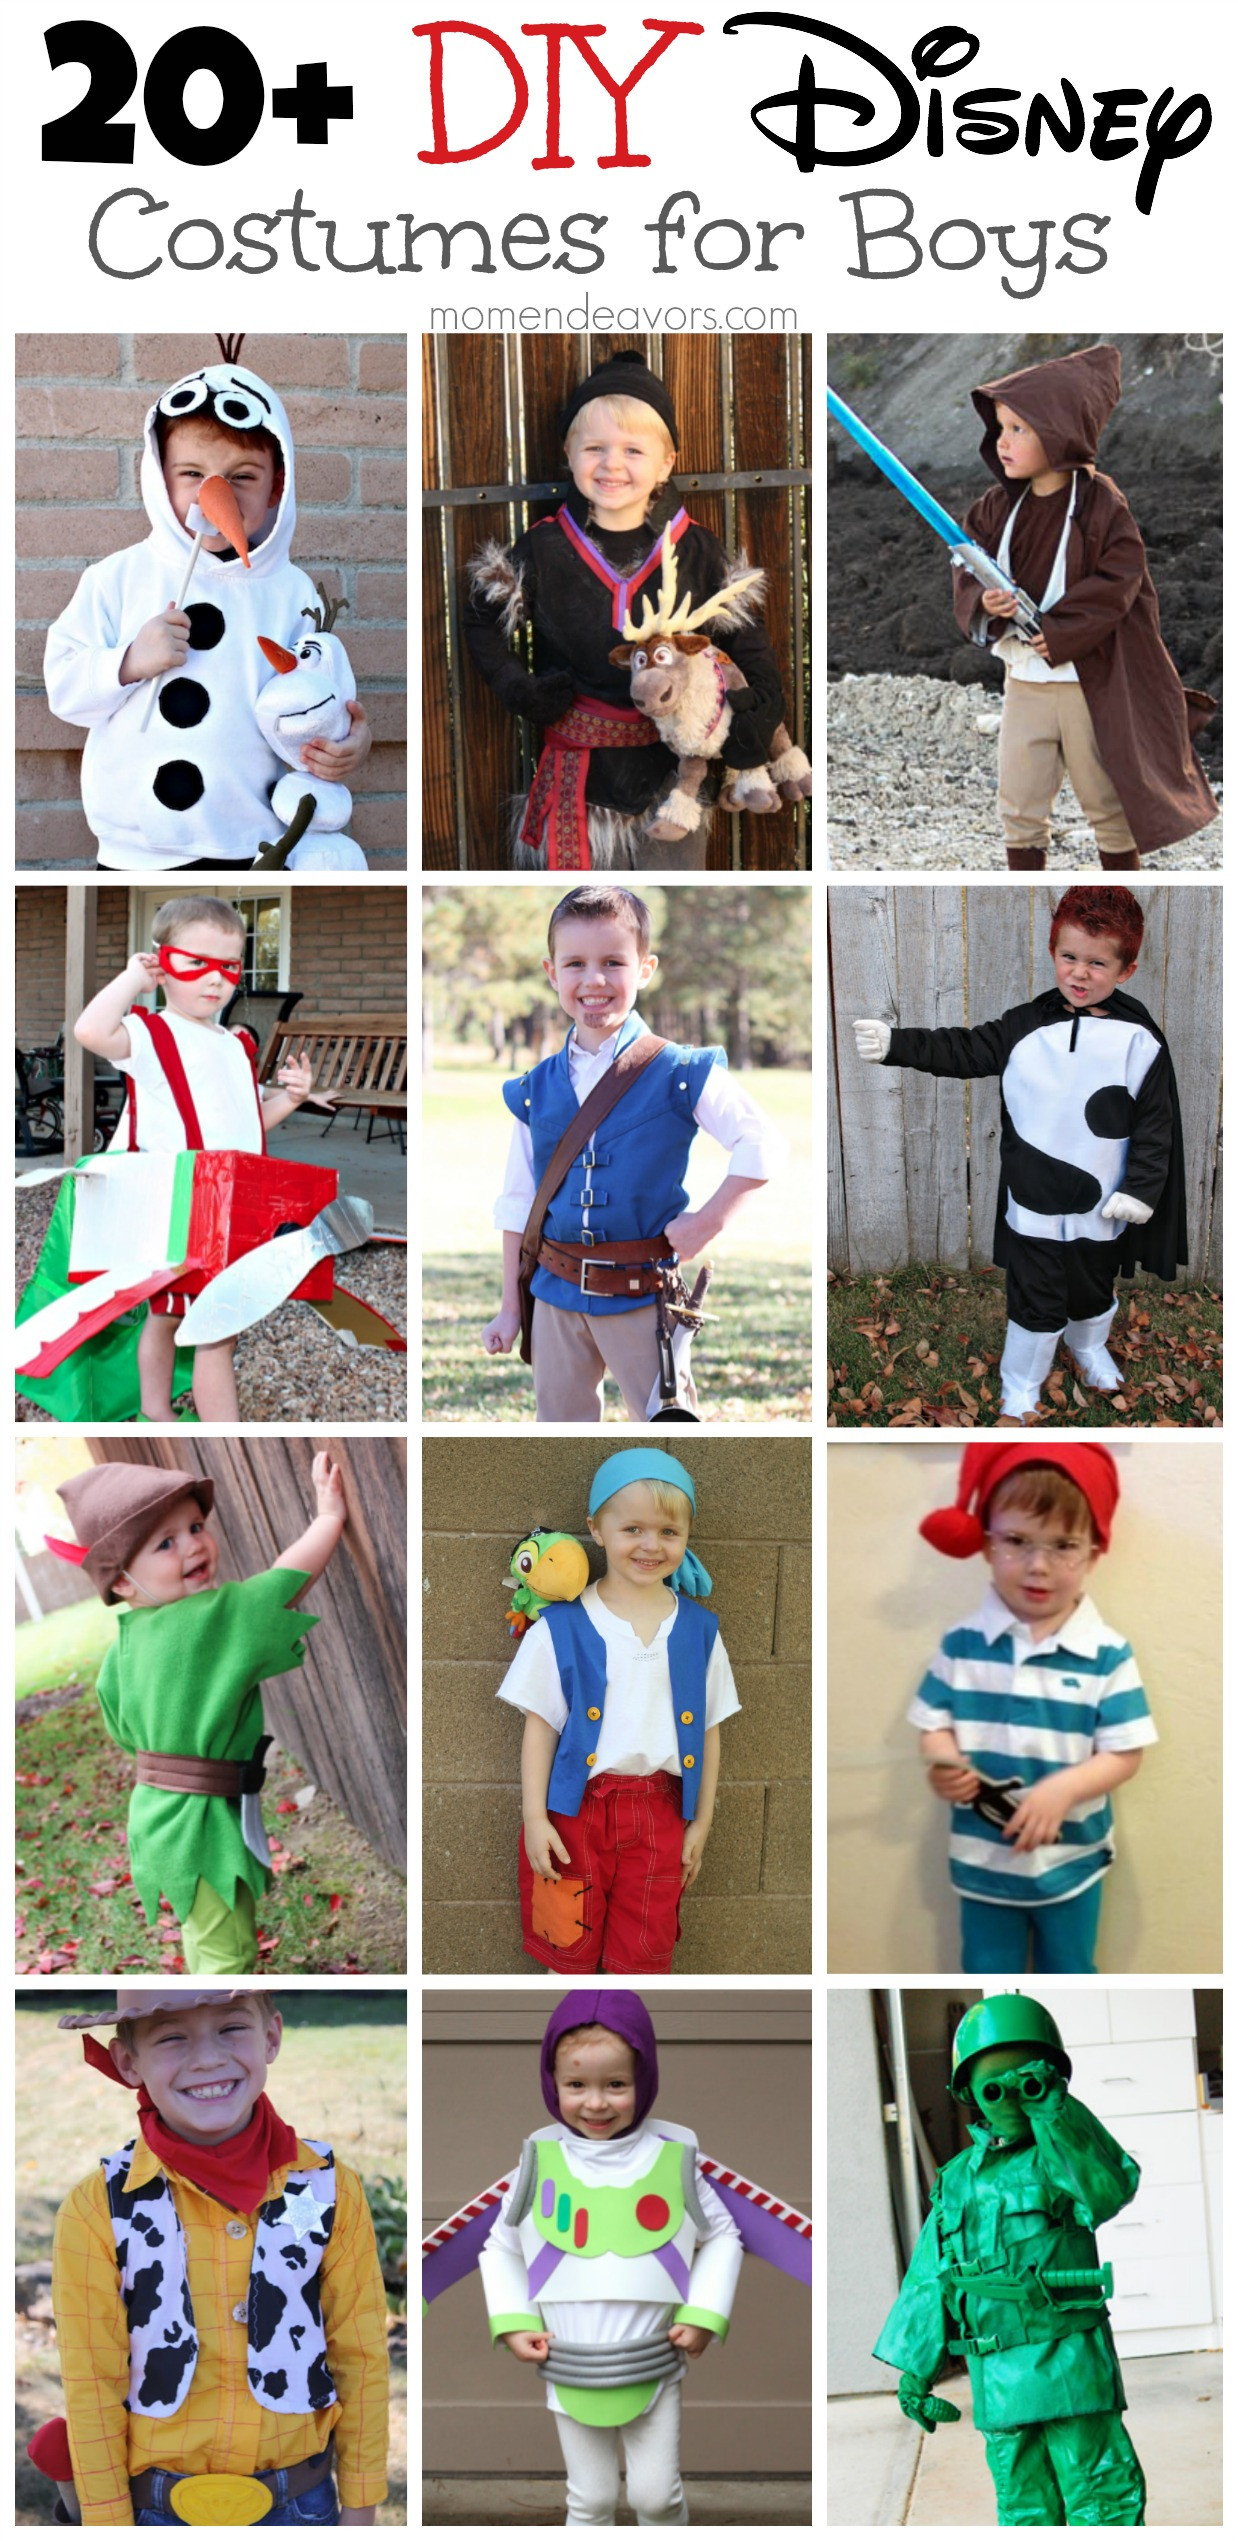 DIY Disney Character Costume
 DIY Disney Costumes for Boys